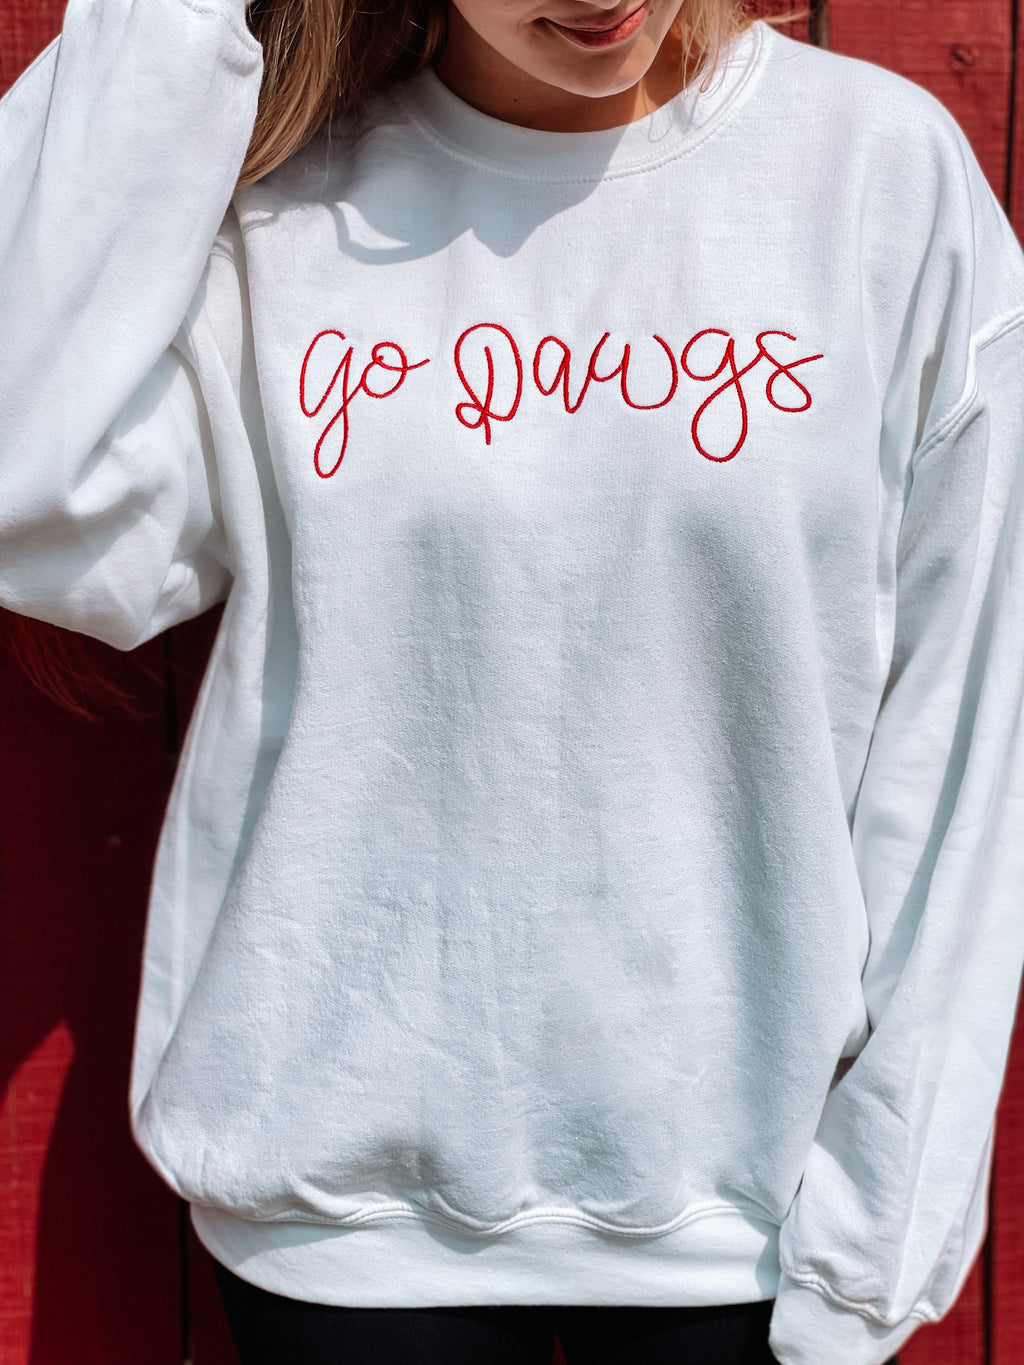 Go Dawgs: Embroidered White Sweatshirt